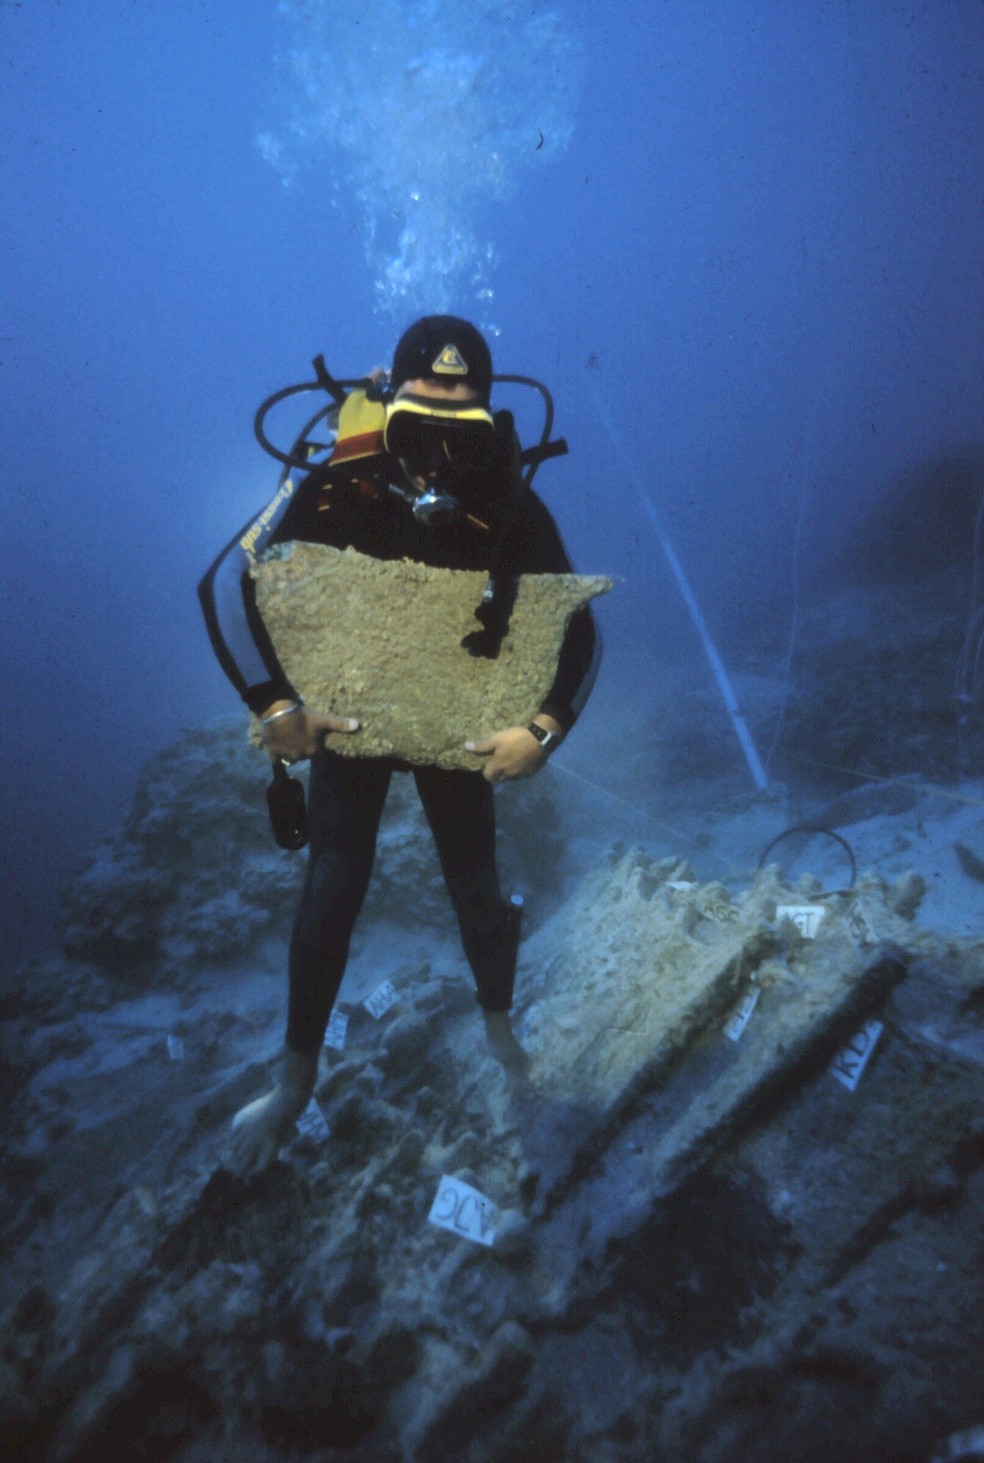 Mergulhador segura placa de cobre descoberta no naufrágio na Turquia  — Foto: Cemal Pulak/Texas A&M University